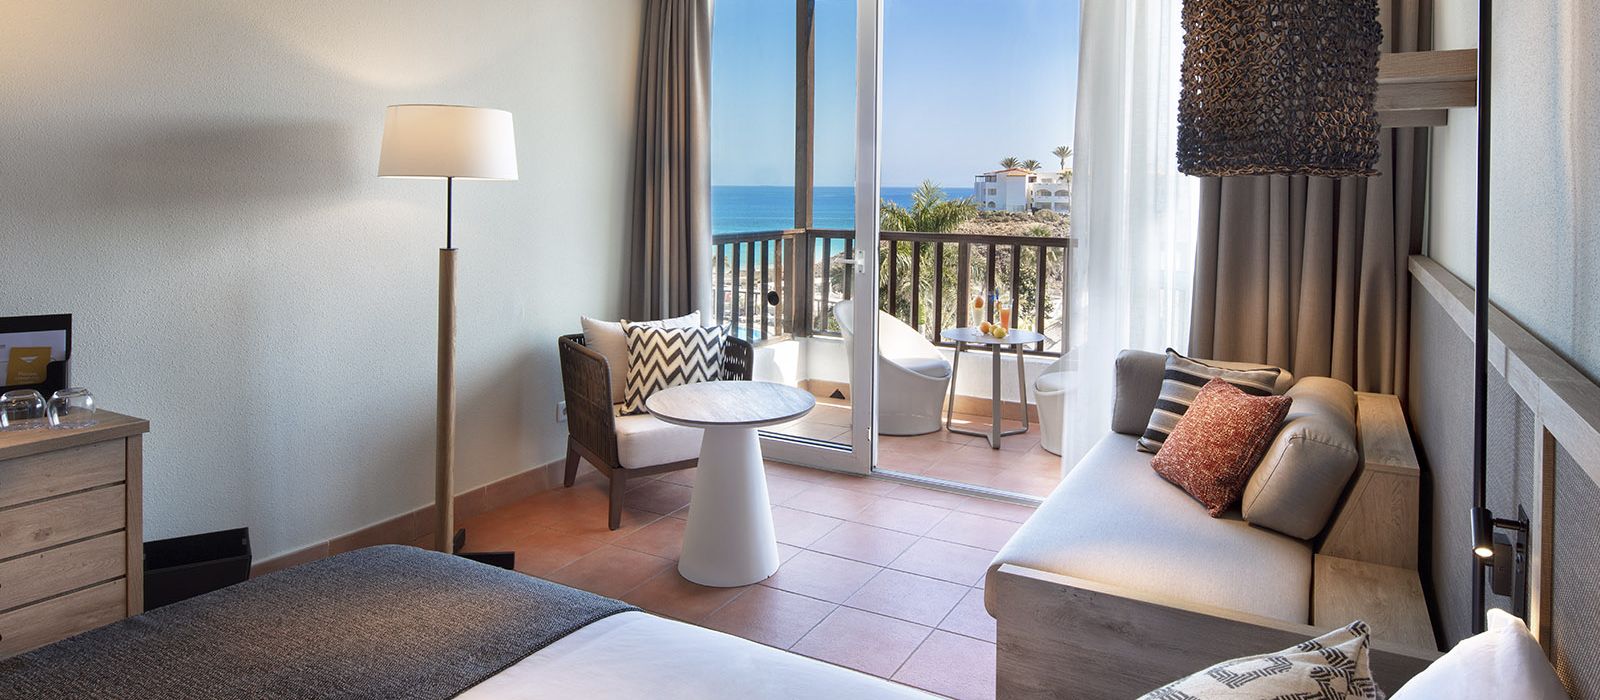 Fotos de Hotel Fuerteventura Princess****